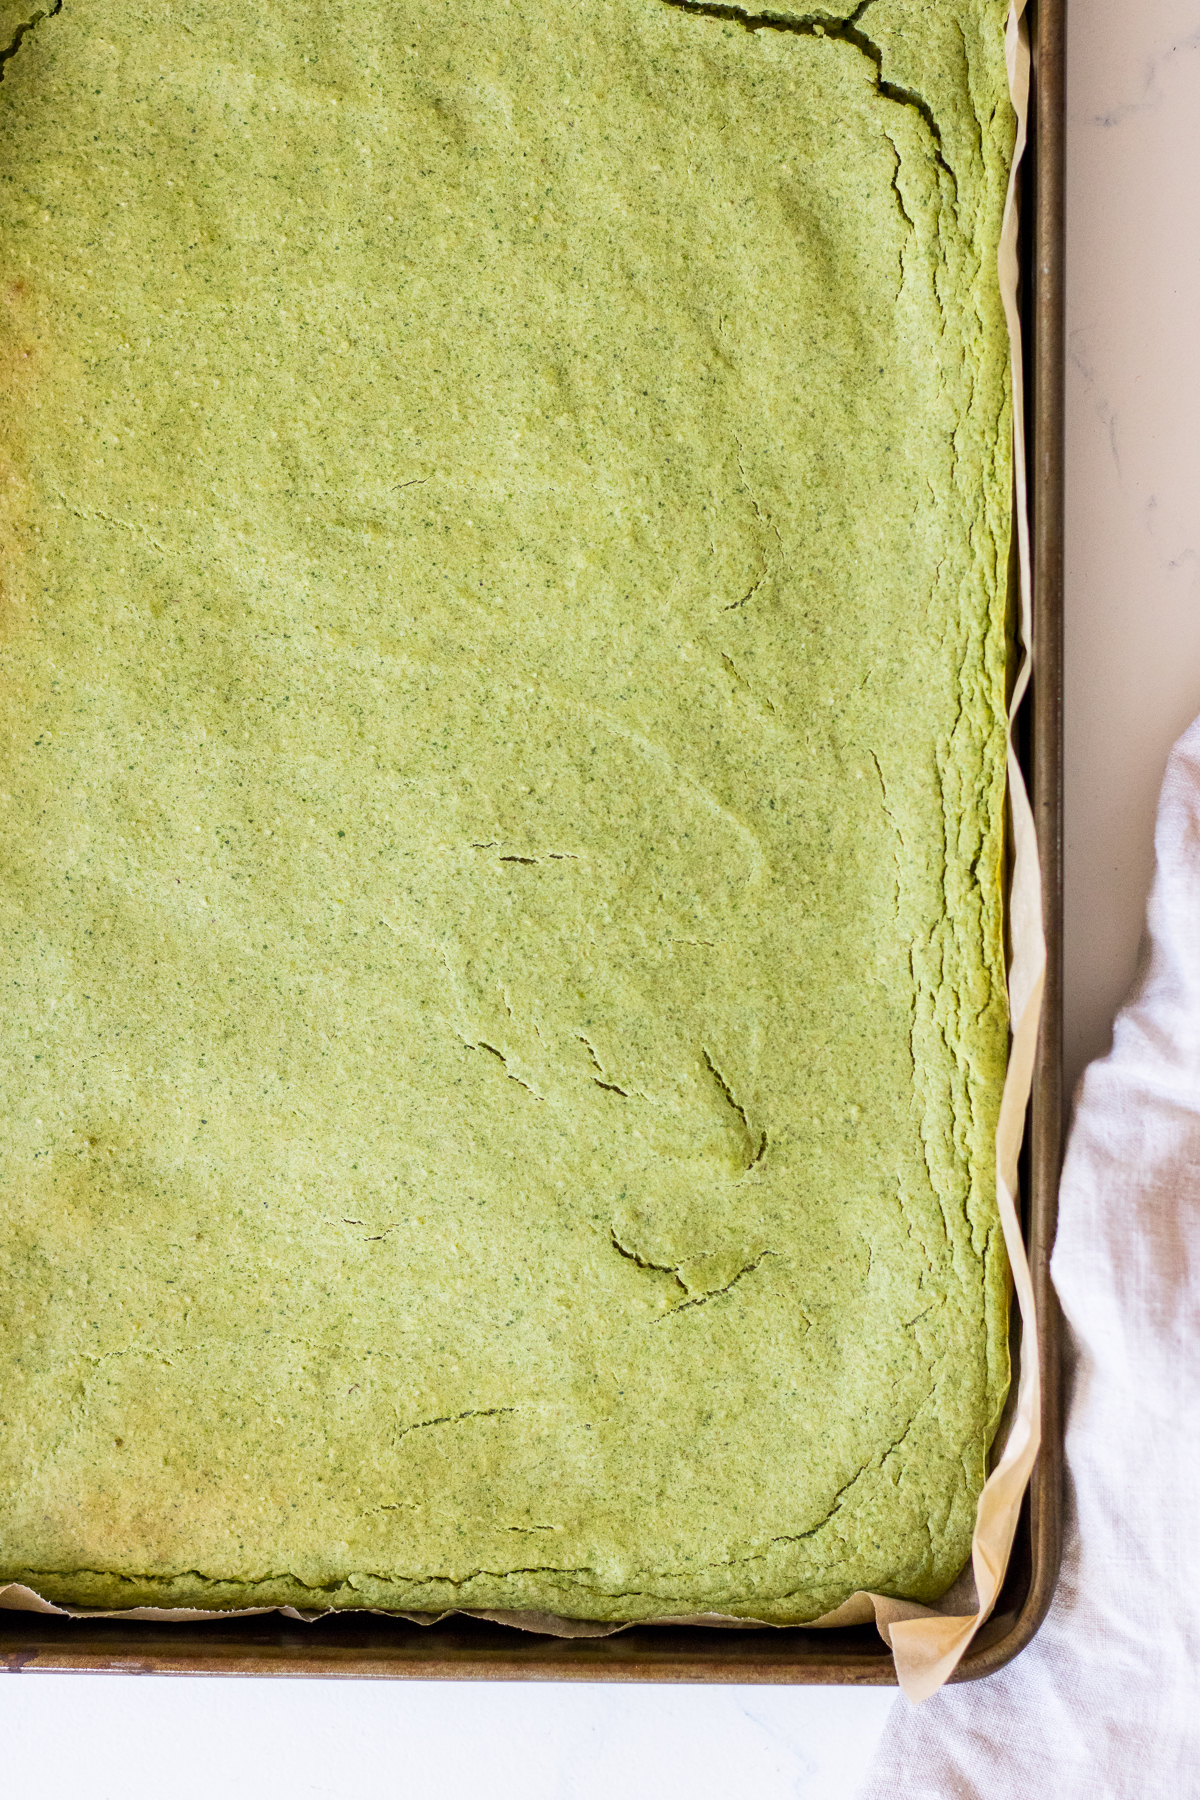 Image of a large green pancake baked into a rectangular sheet pan